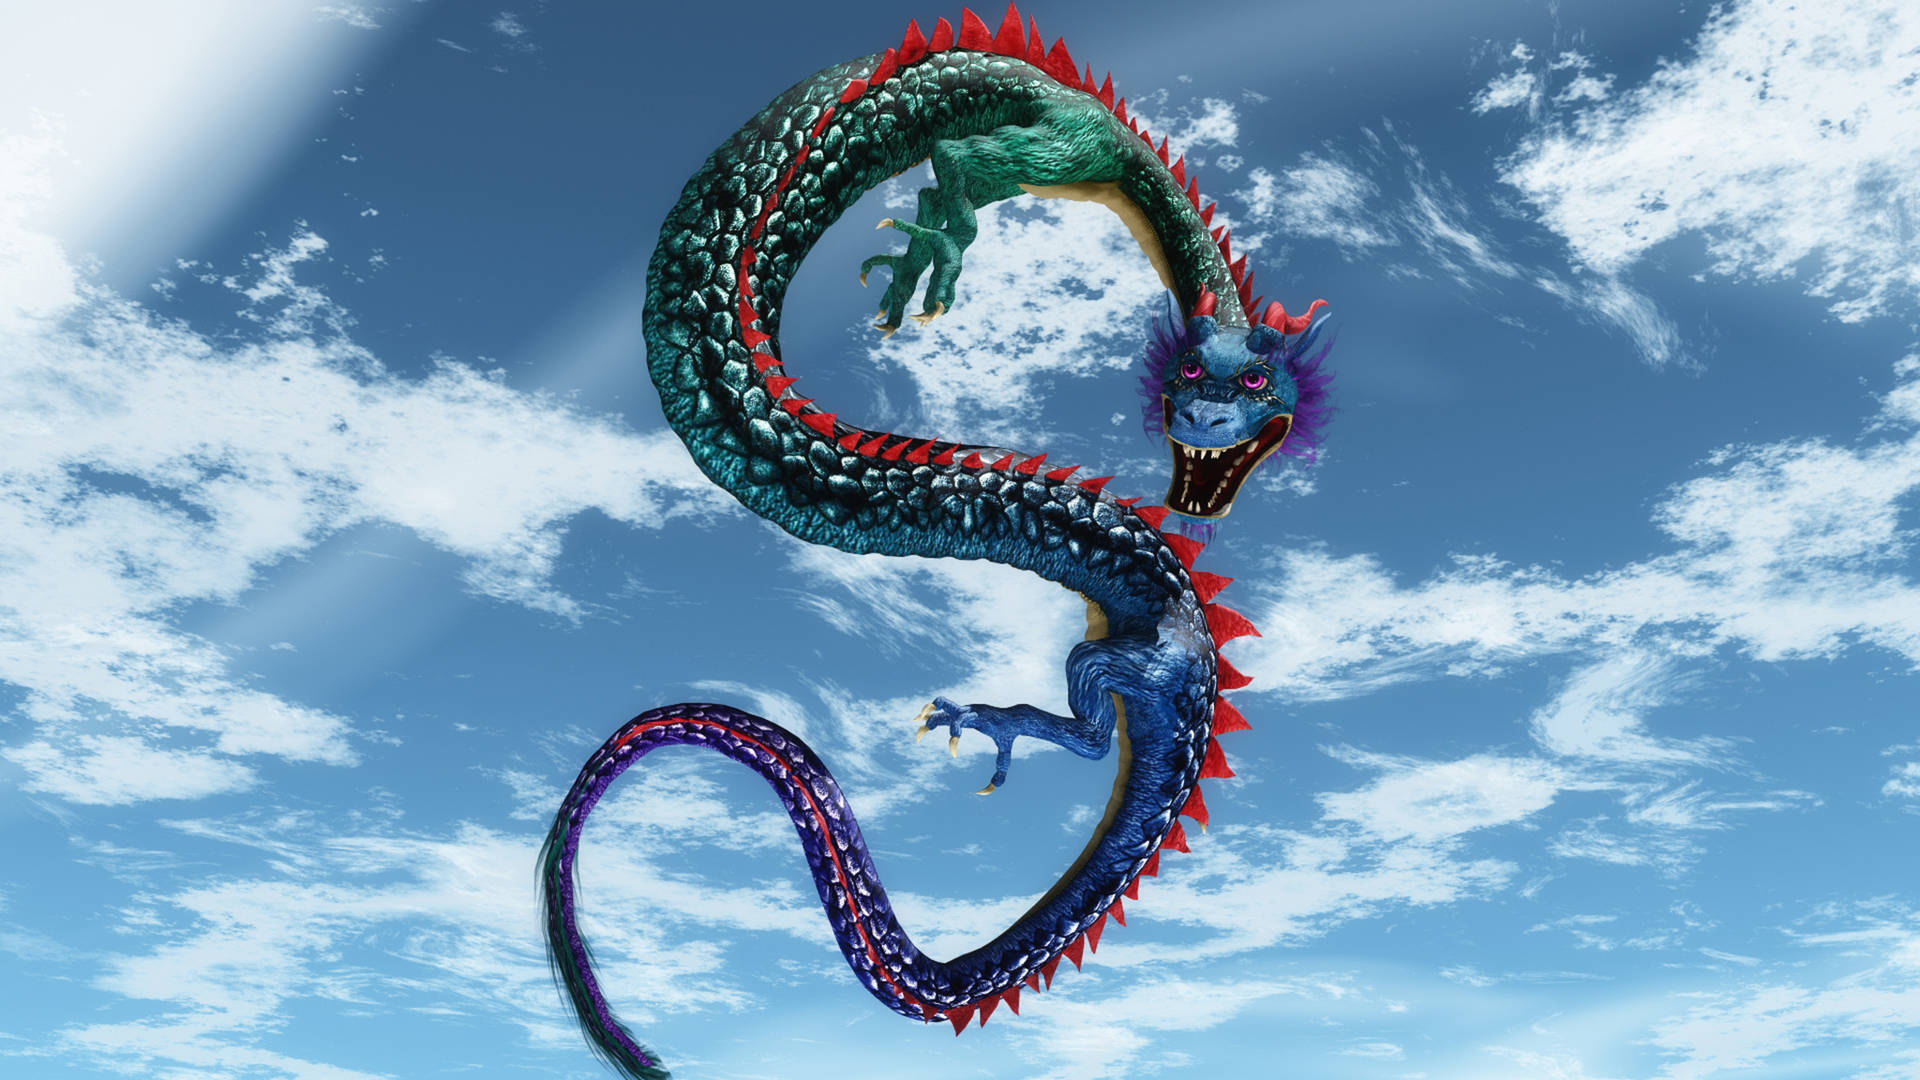 Colorful Eastern Dragon Wallpaper